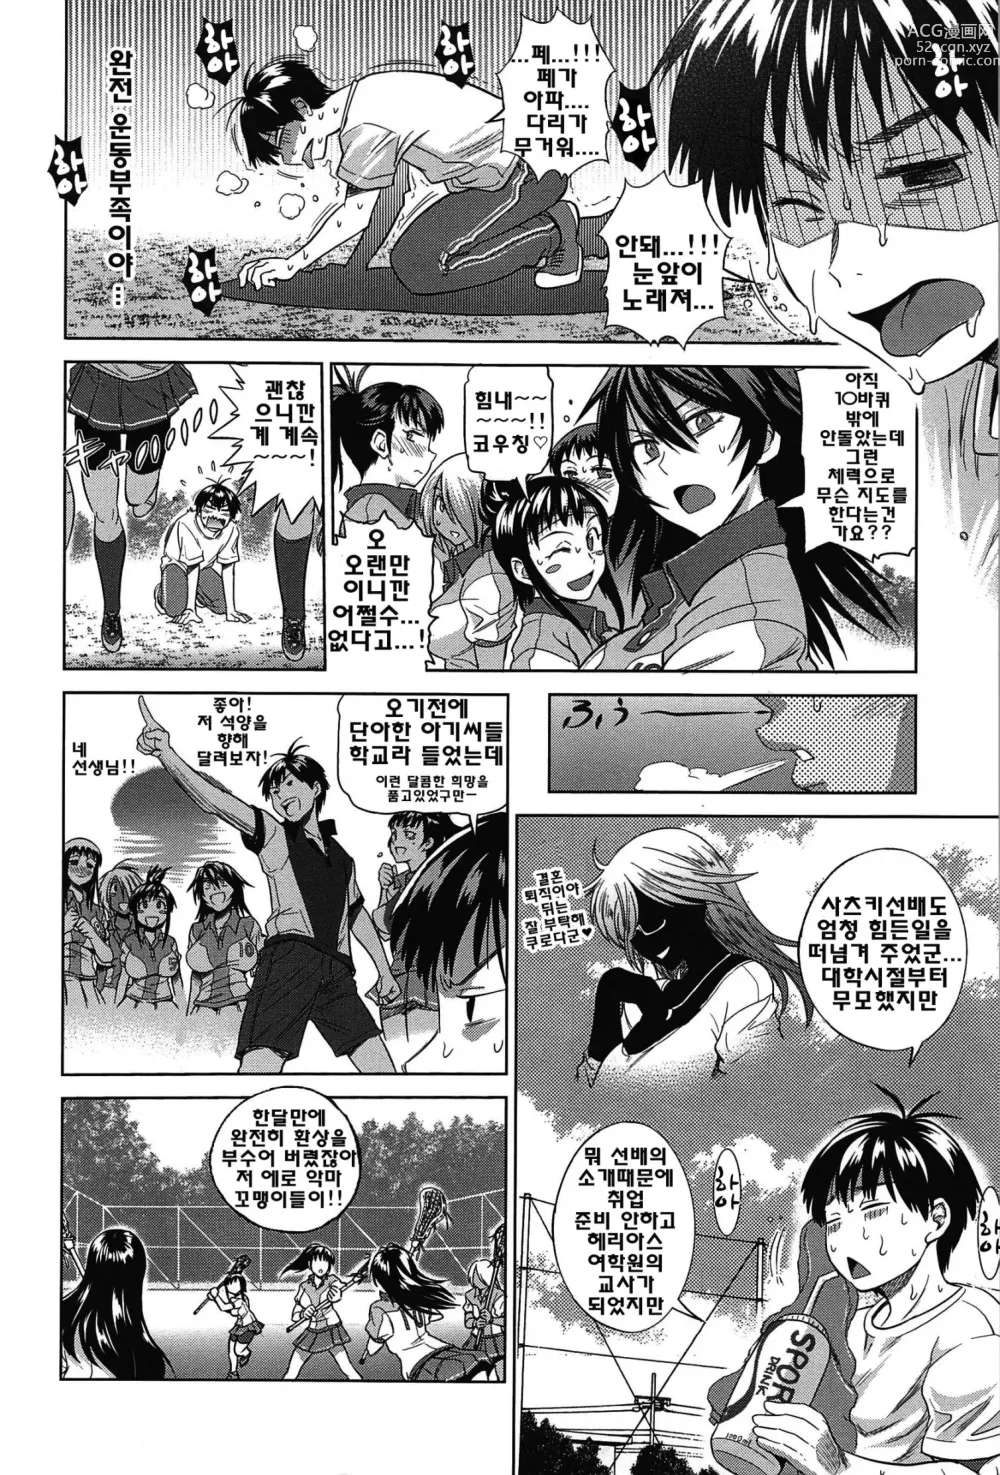 Page 12 of manga Joshi Luck!